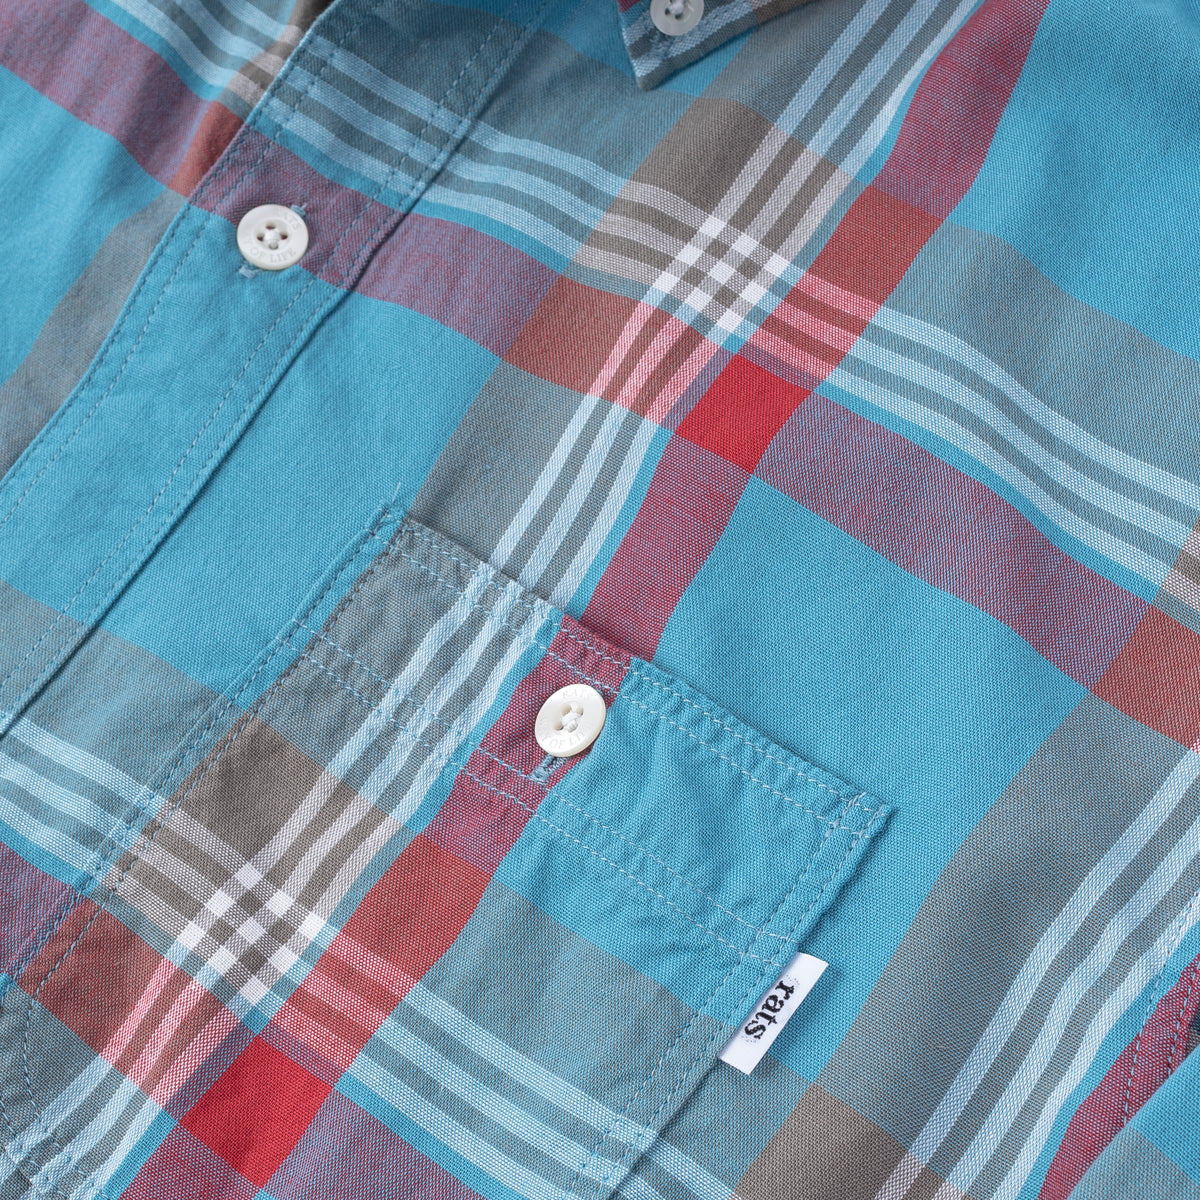 Button Down Check Shirt - Blue/Red